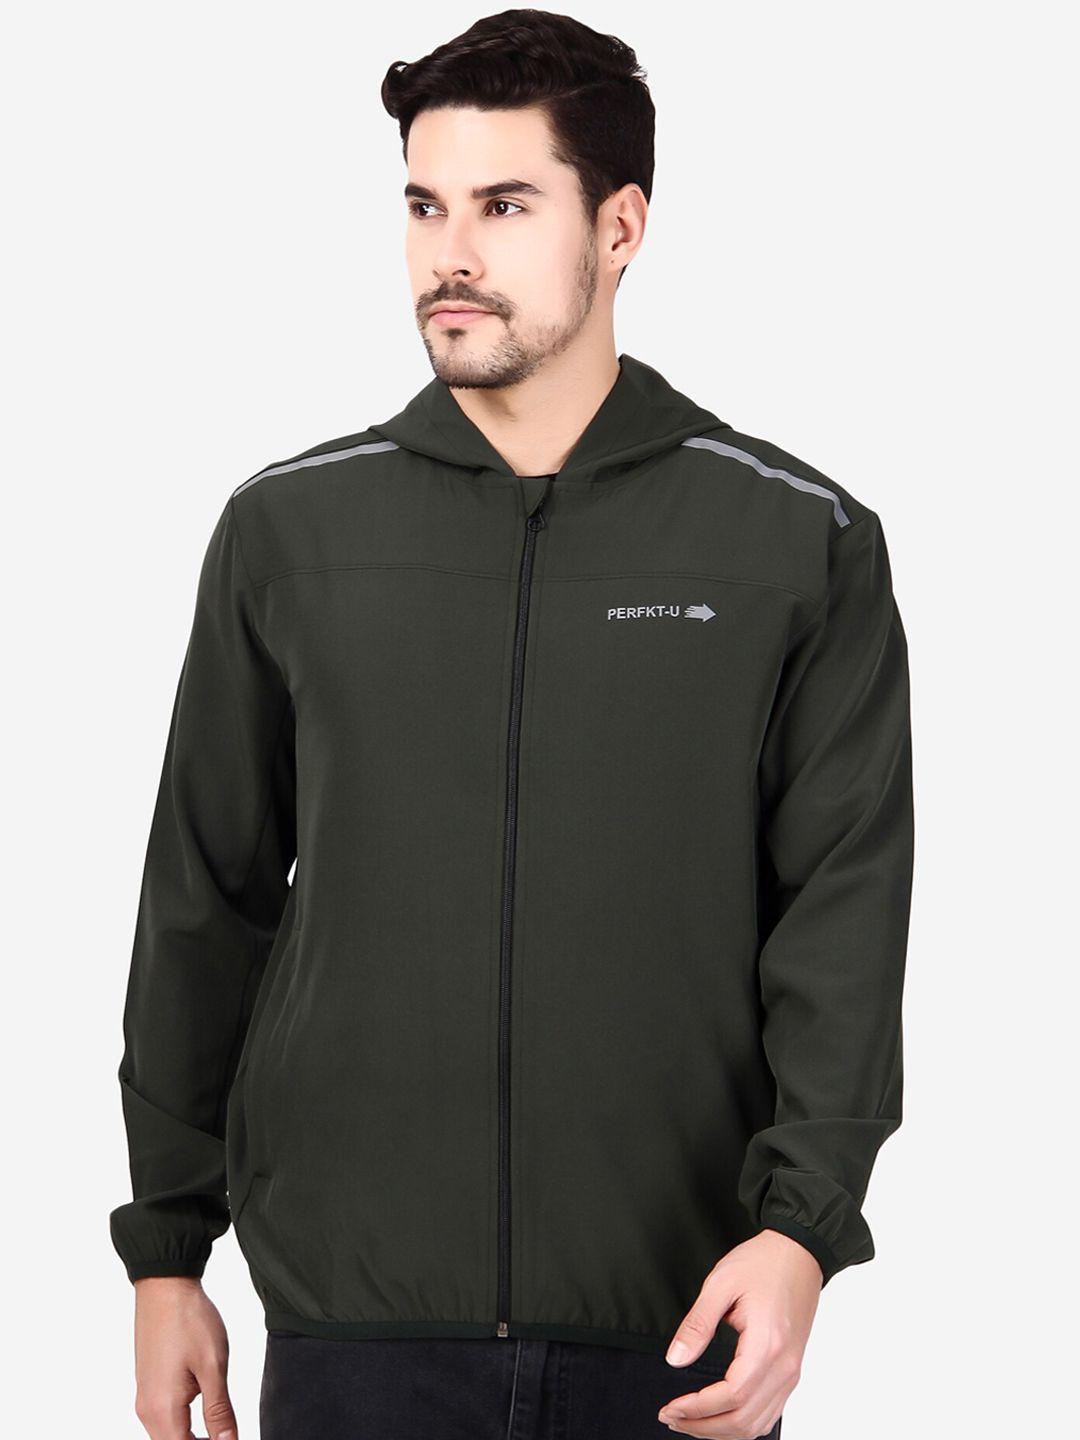 perfkt-u hooded windcheater rapid-dry running sporty jacket